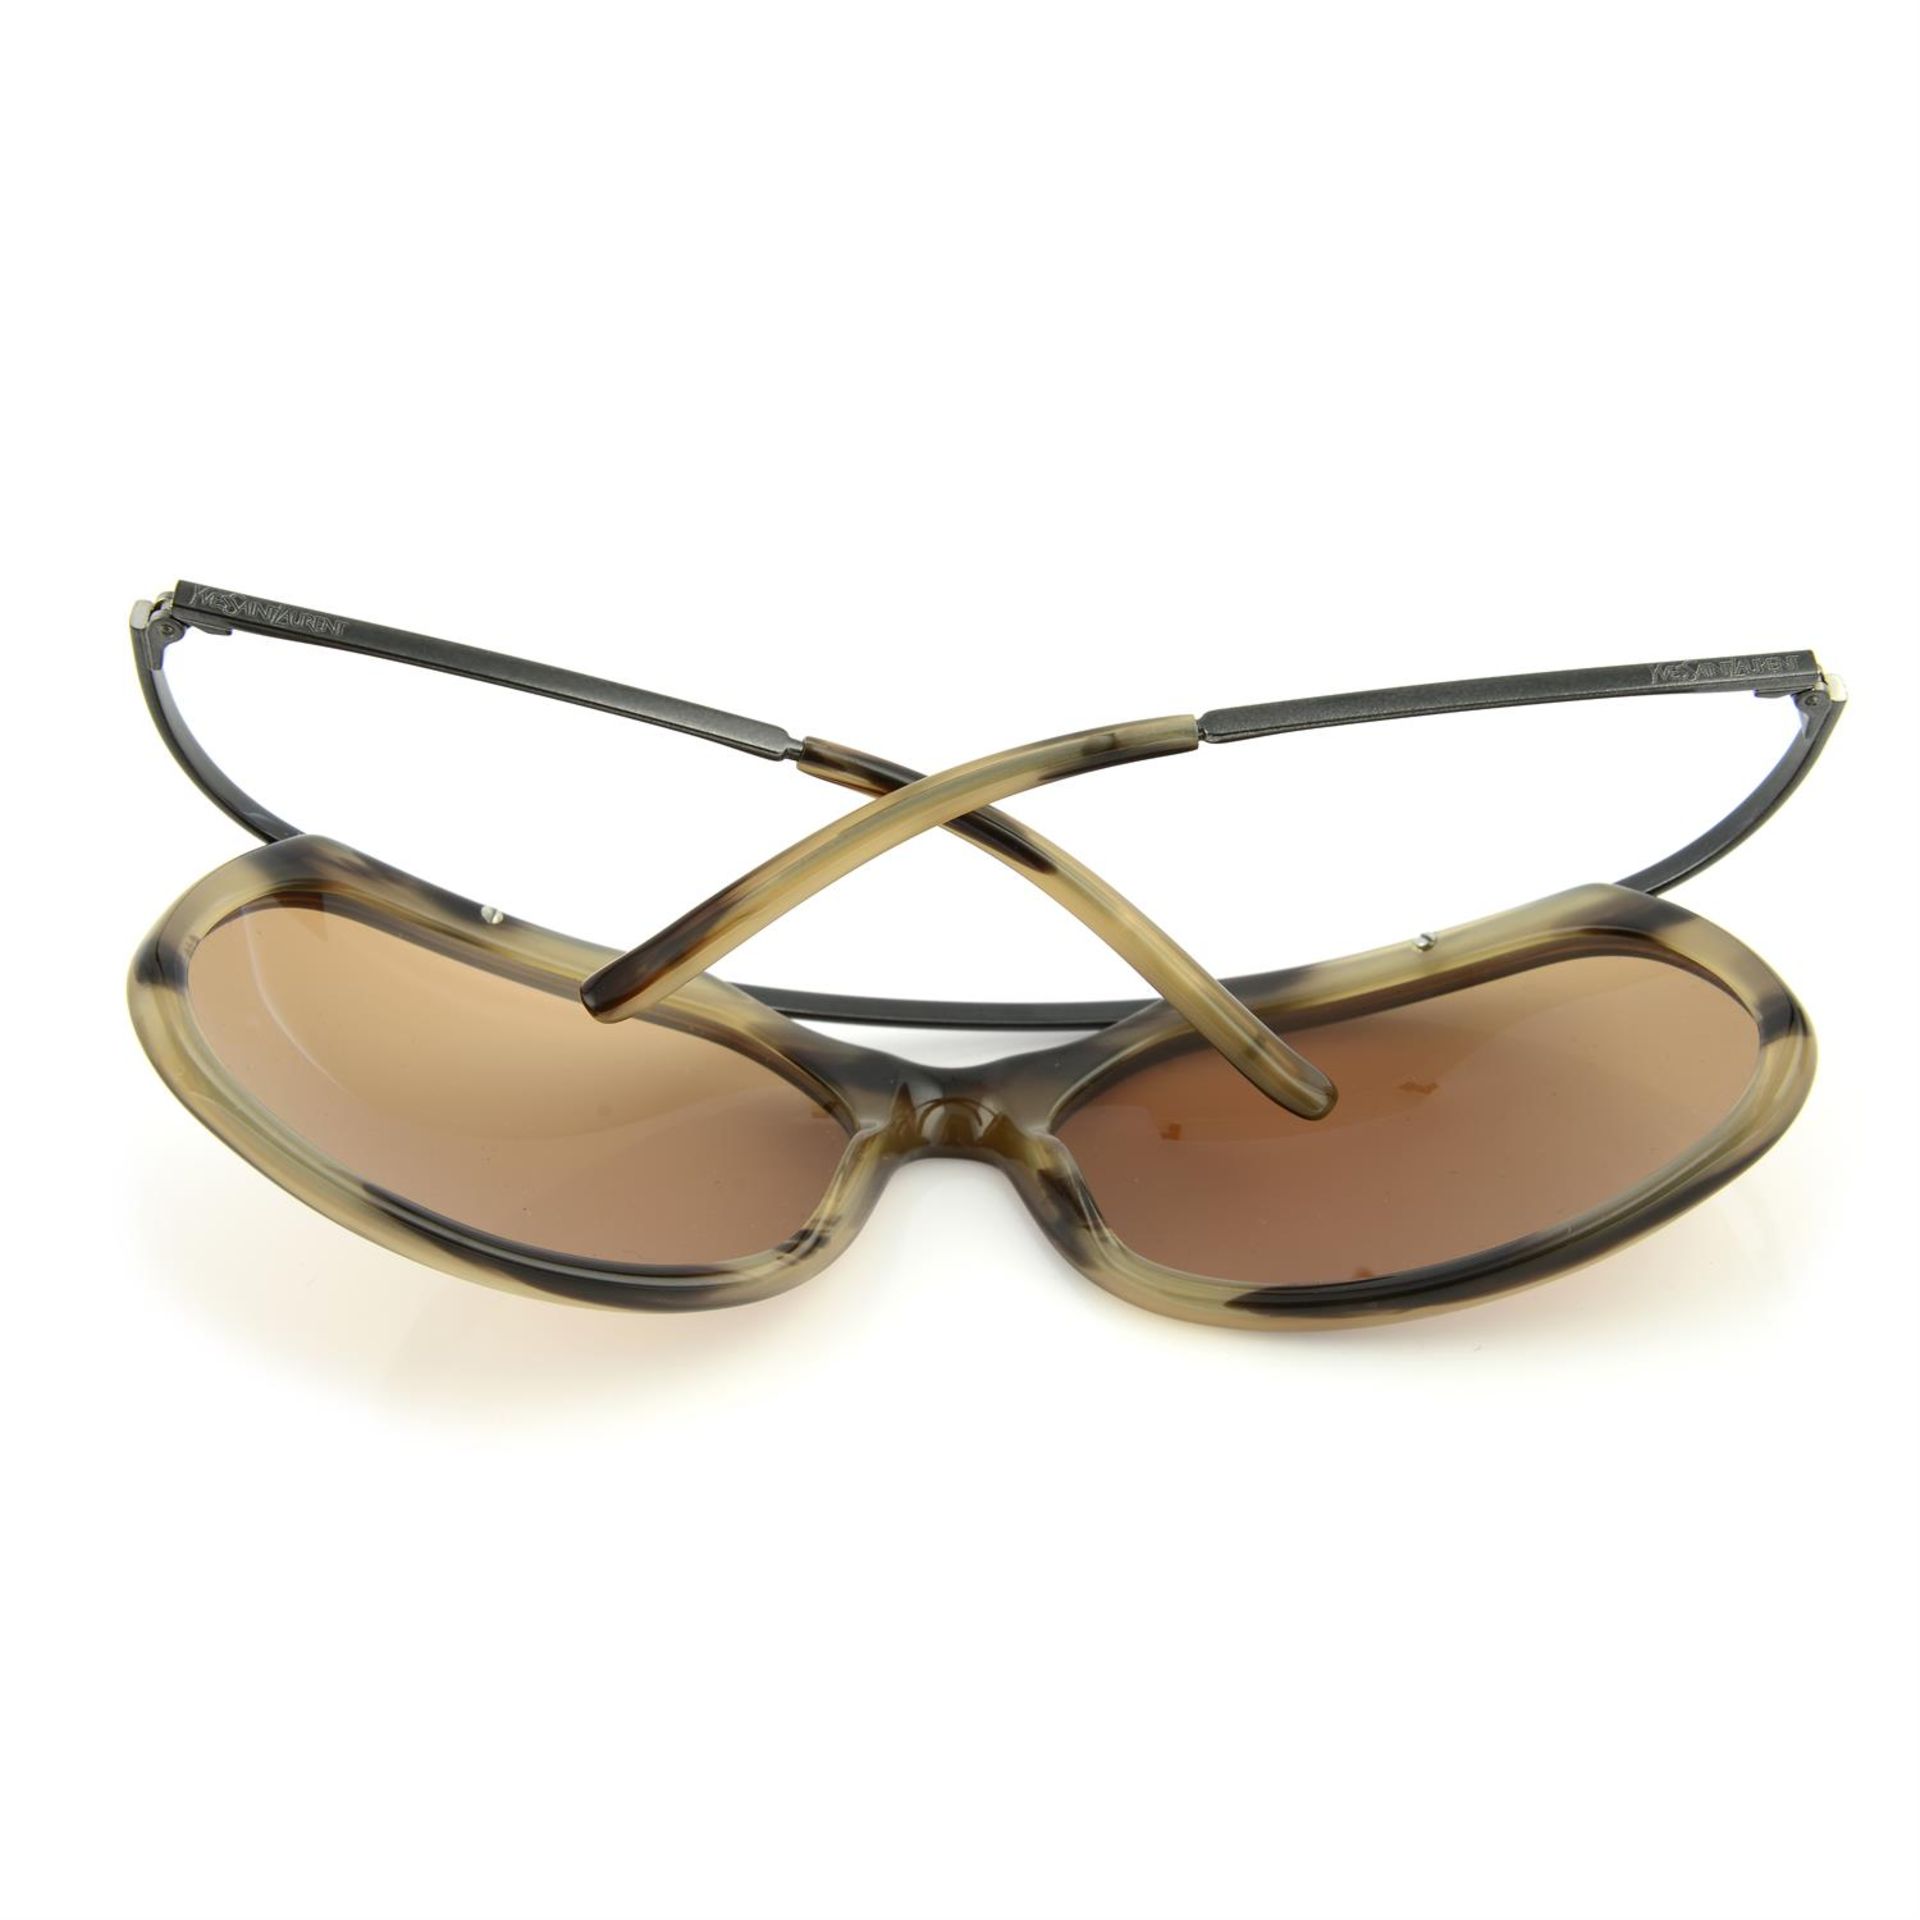 YVES SAINT LAURENT - a pair of sunglasses. - Bild 2 aus 3